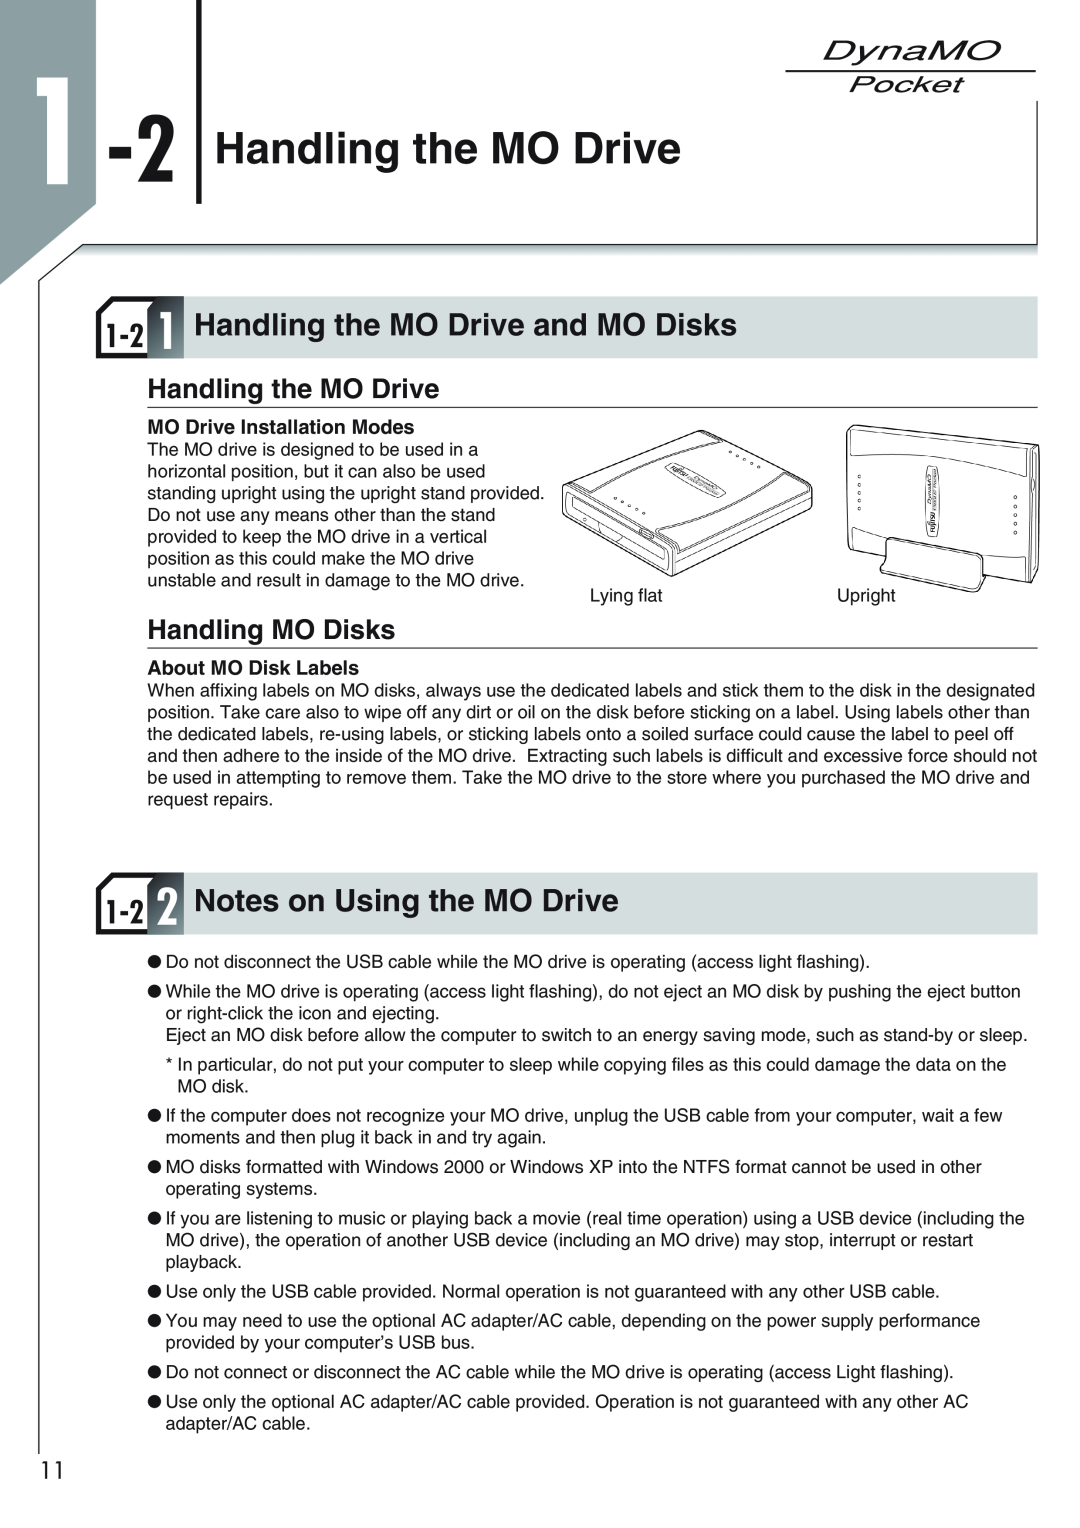 Fujitsu 1300U2 1 -2 Handling the MO Drive, 1-2 1 Handling the MO Drive and MO Disks, 1-2 2 Notes on Using the MO Drive 